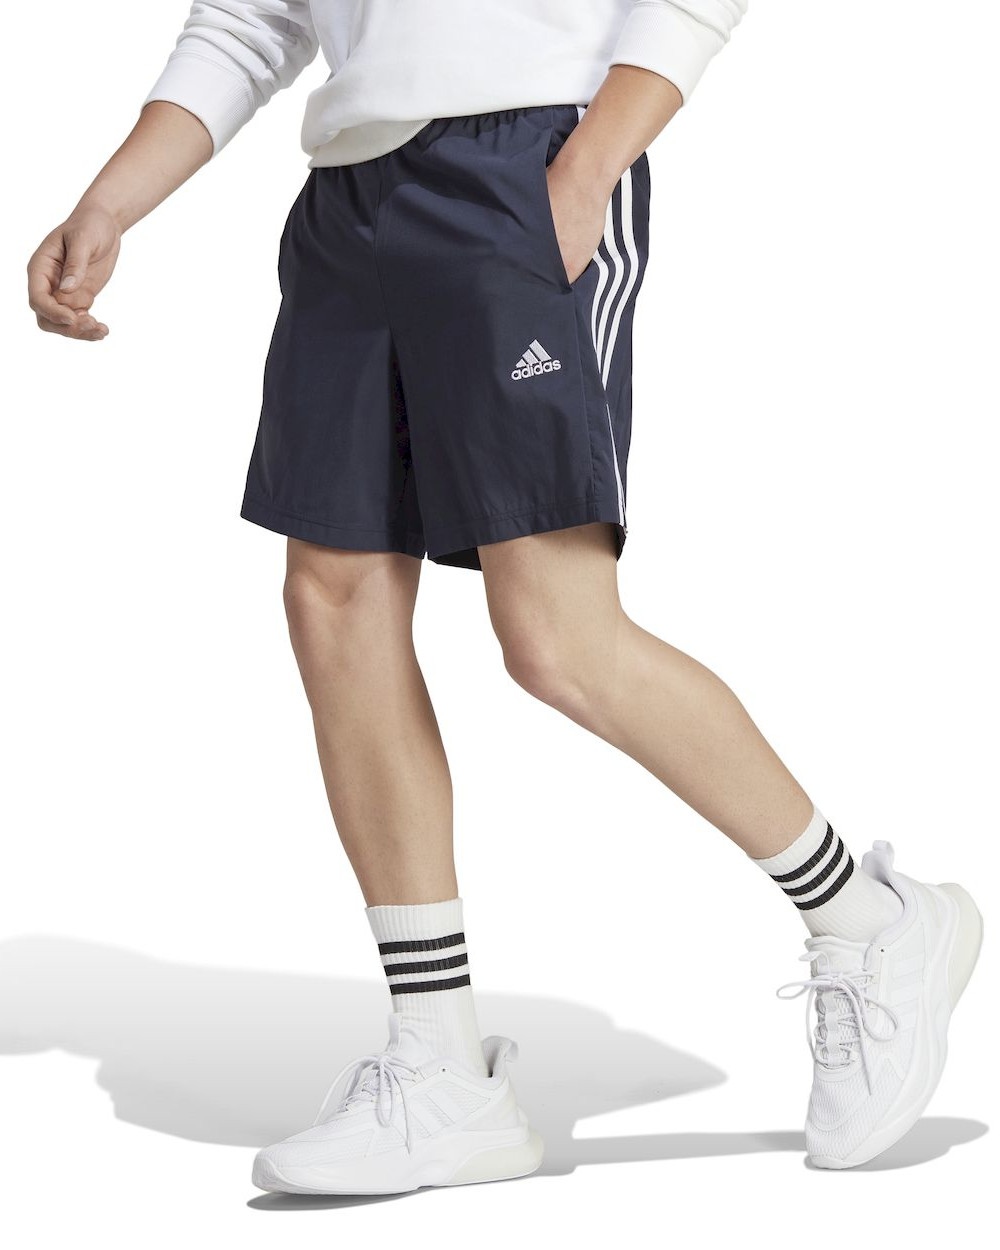  Pantaloncini Shorts UOMO Adidas 3 Stripes Chelsea Woven Blu Bianco con tasche